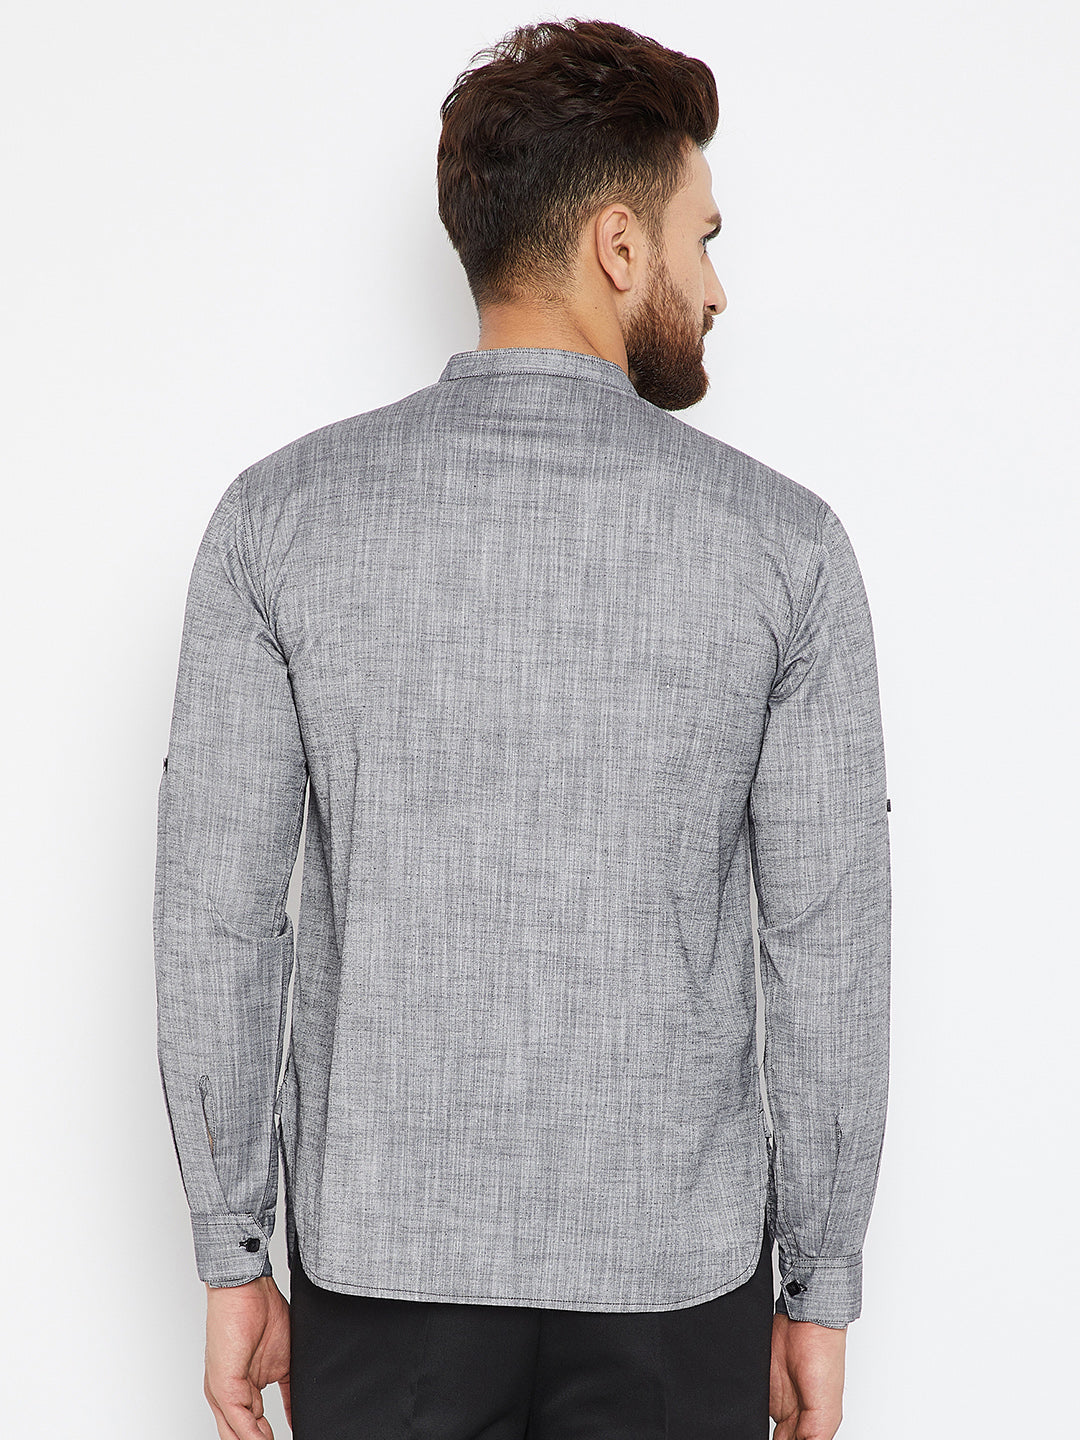 Men's Textured Grey Shirt Kurta - Even Apparels